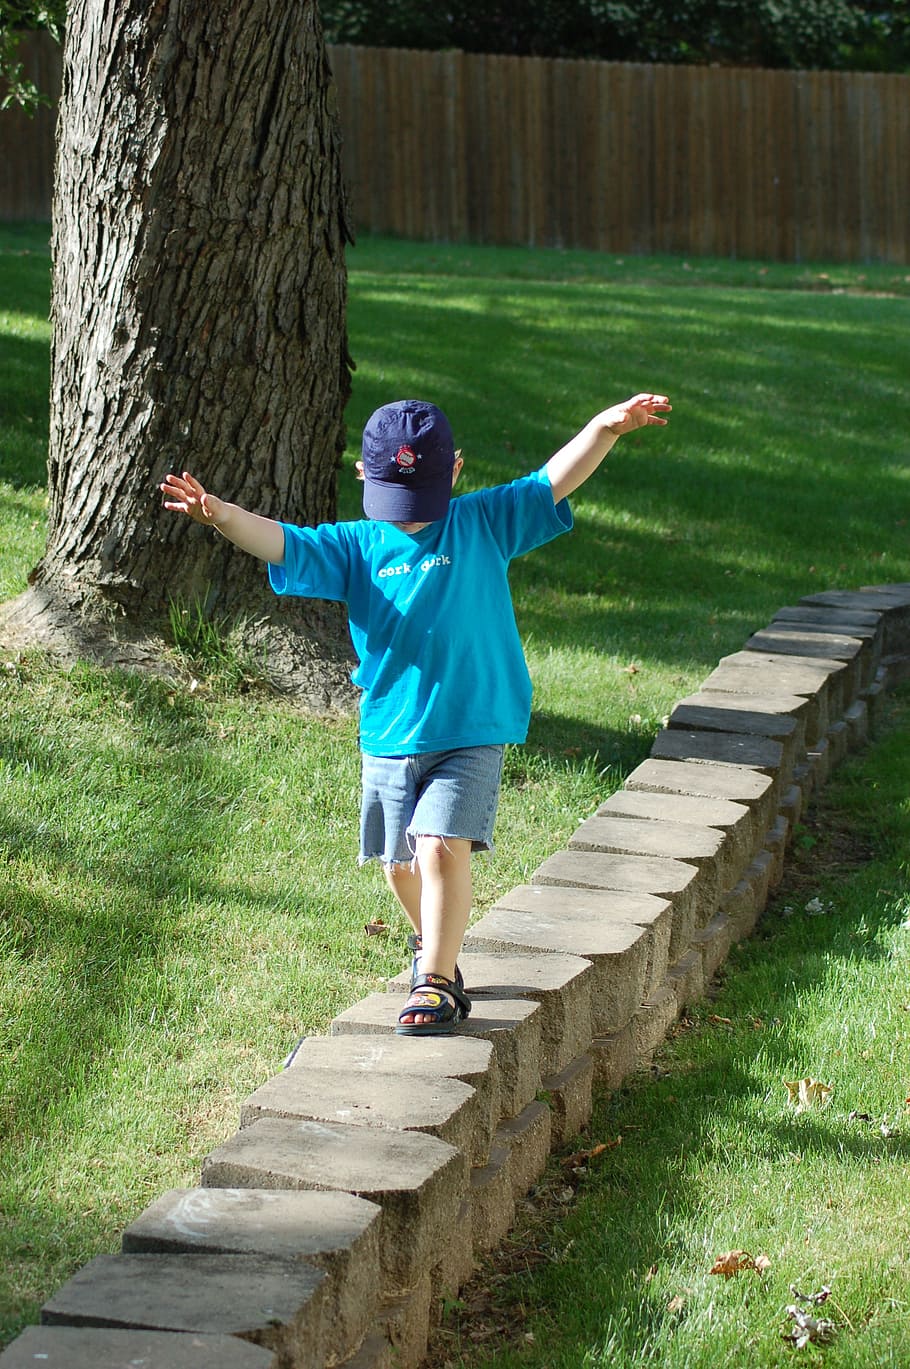 stone wall, child, kid, walking, balancing, balance, cap, plant, childhood, one person